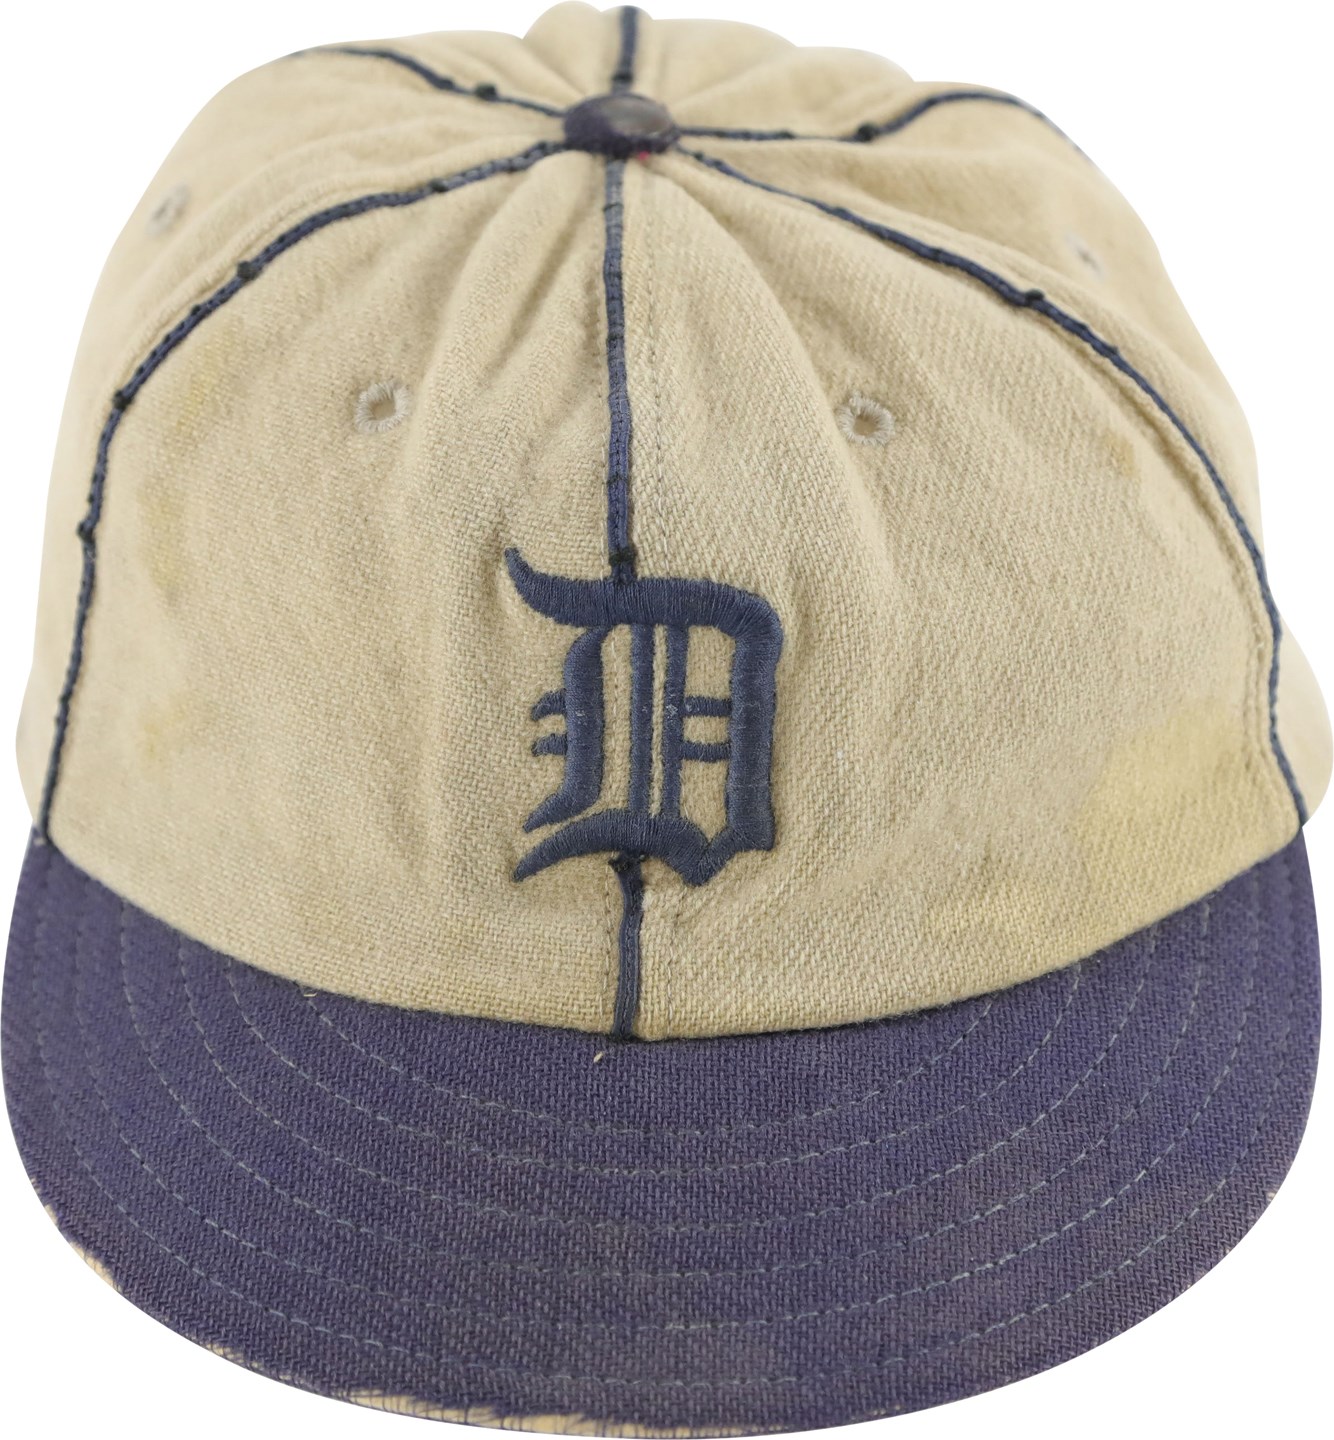 Circa 1932 Detroit Tigers Baseball Hat